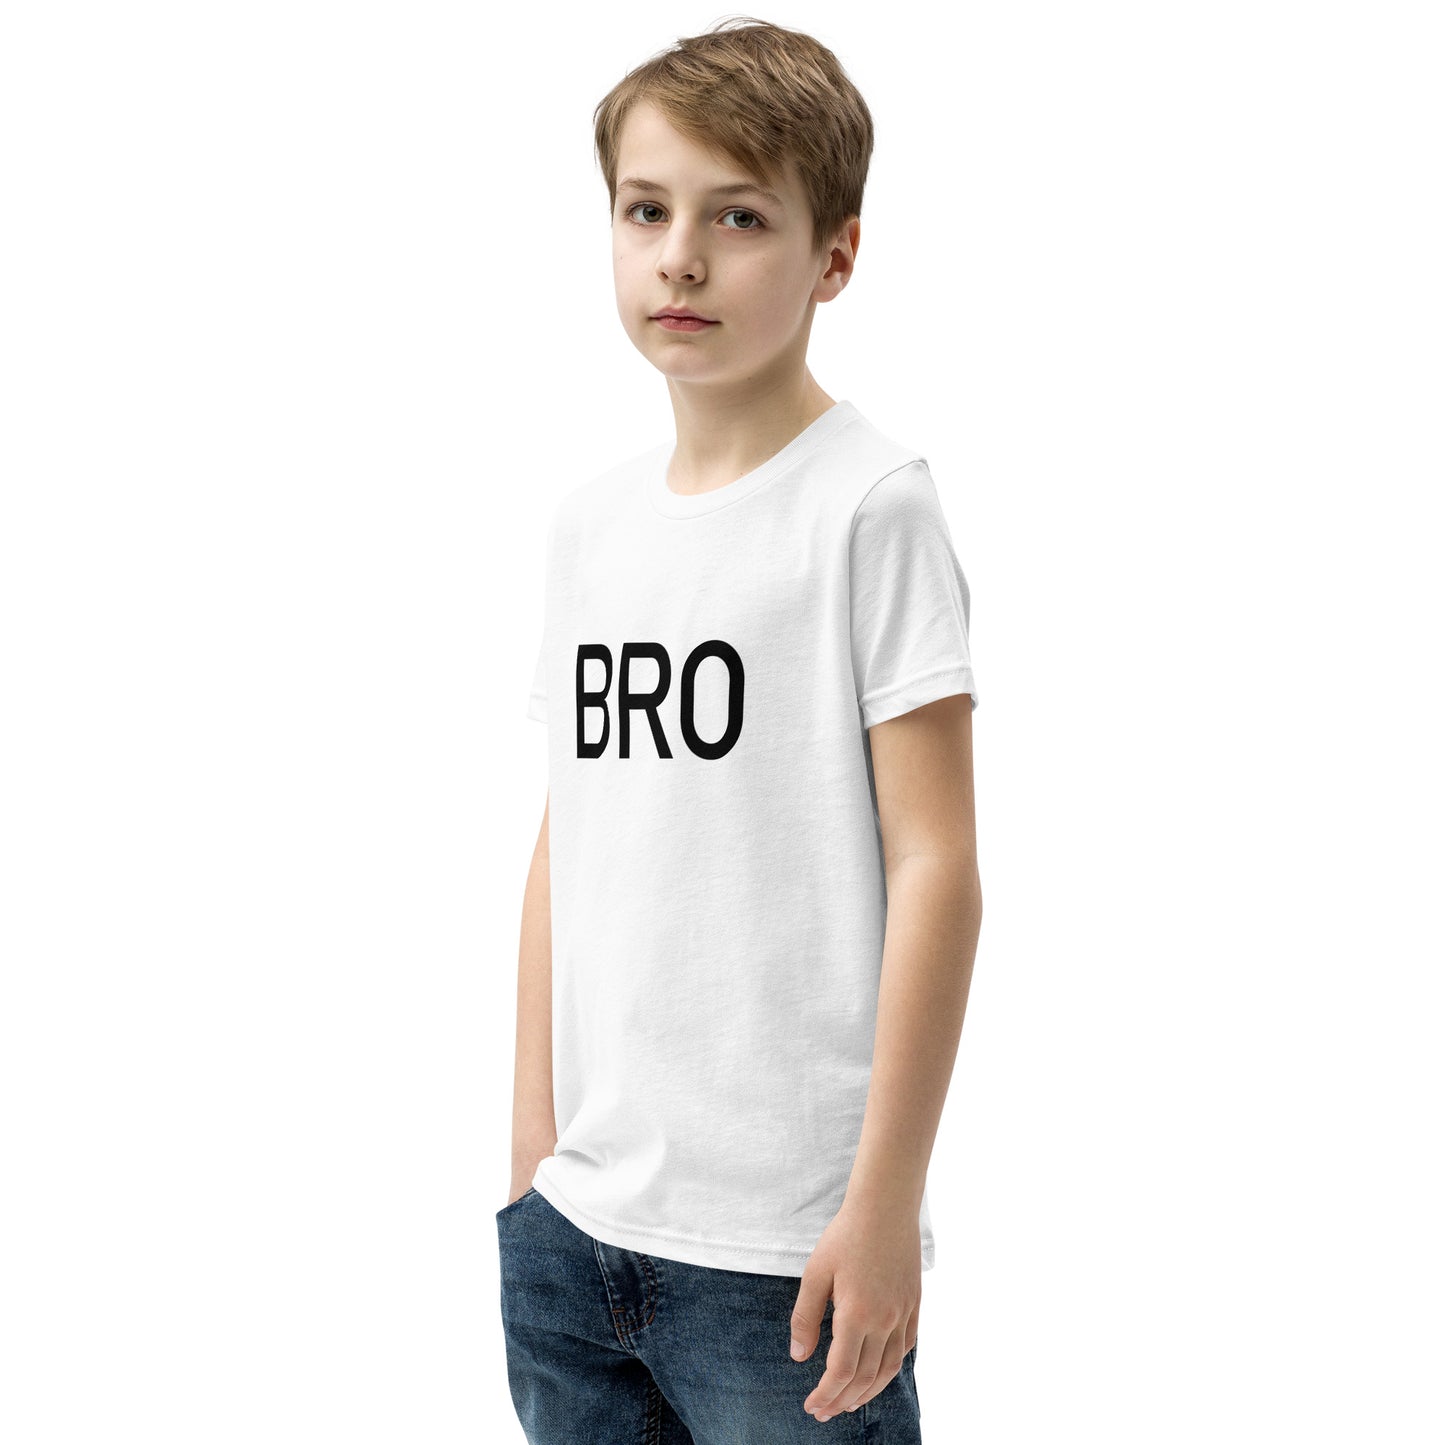 Bro - Sustainably Made Kids T-Shirt